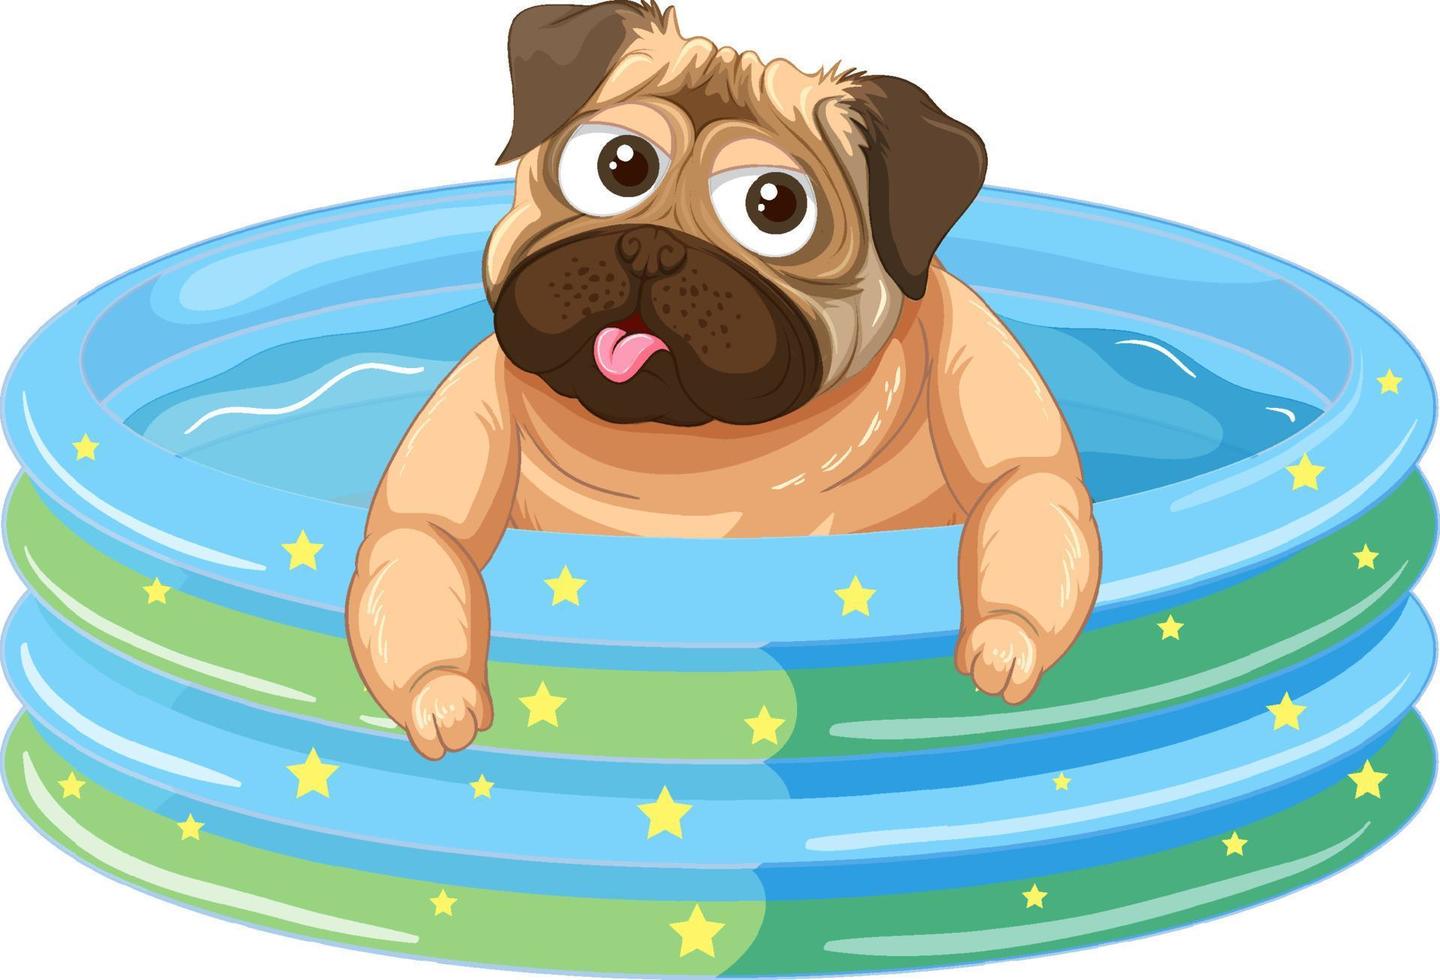 A pug dog in inflatable pool cartoon vector